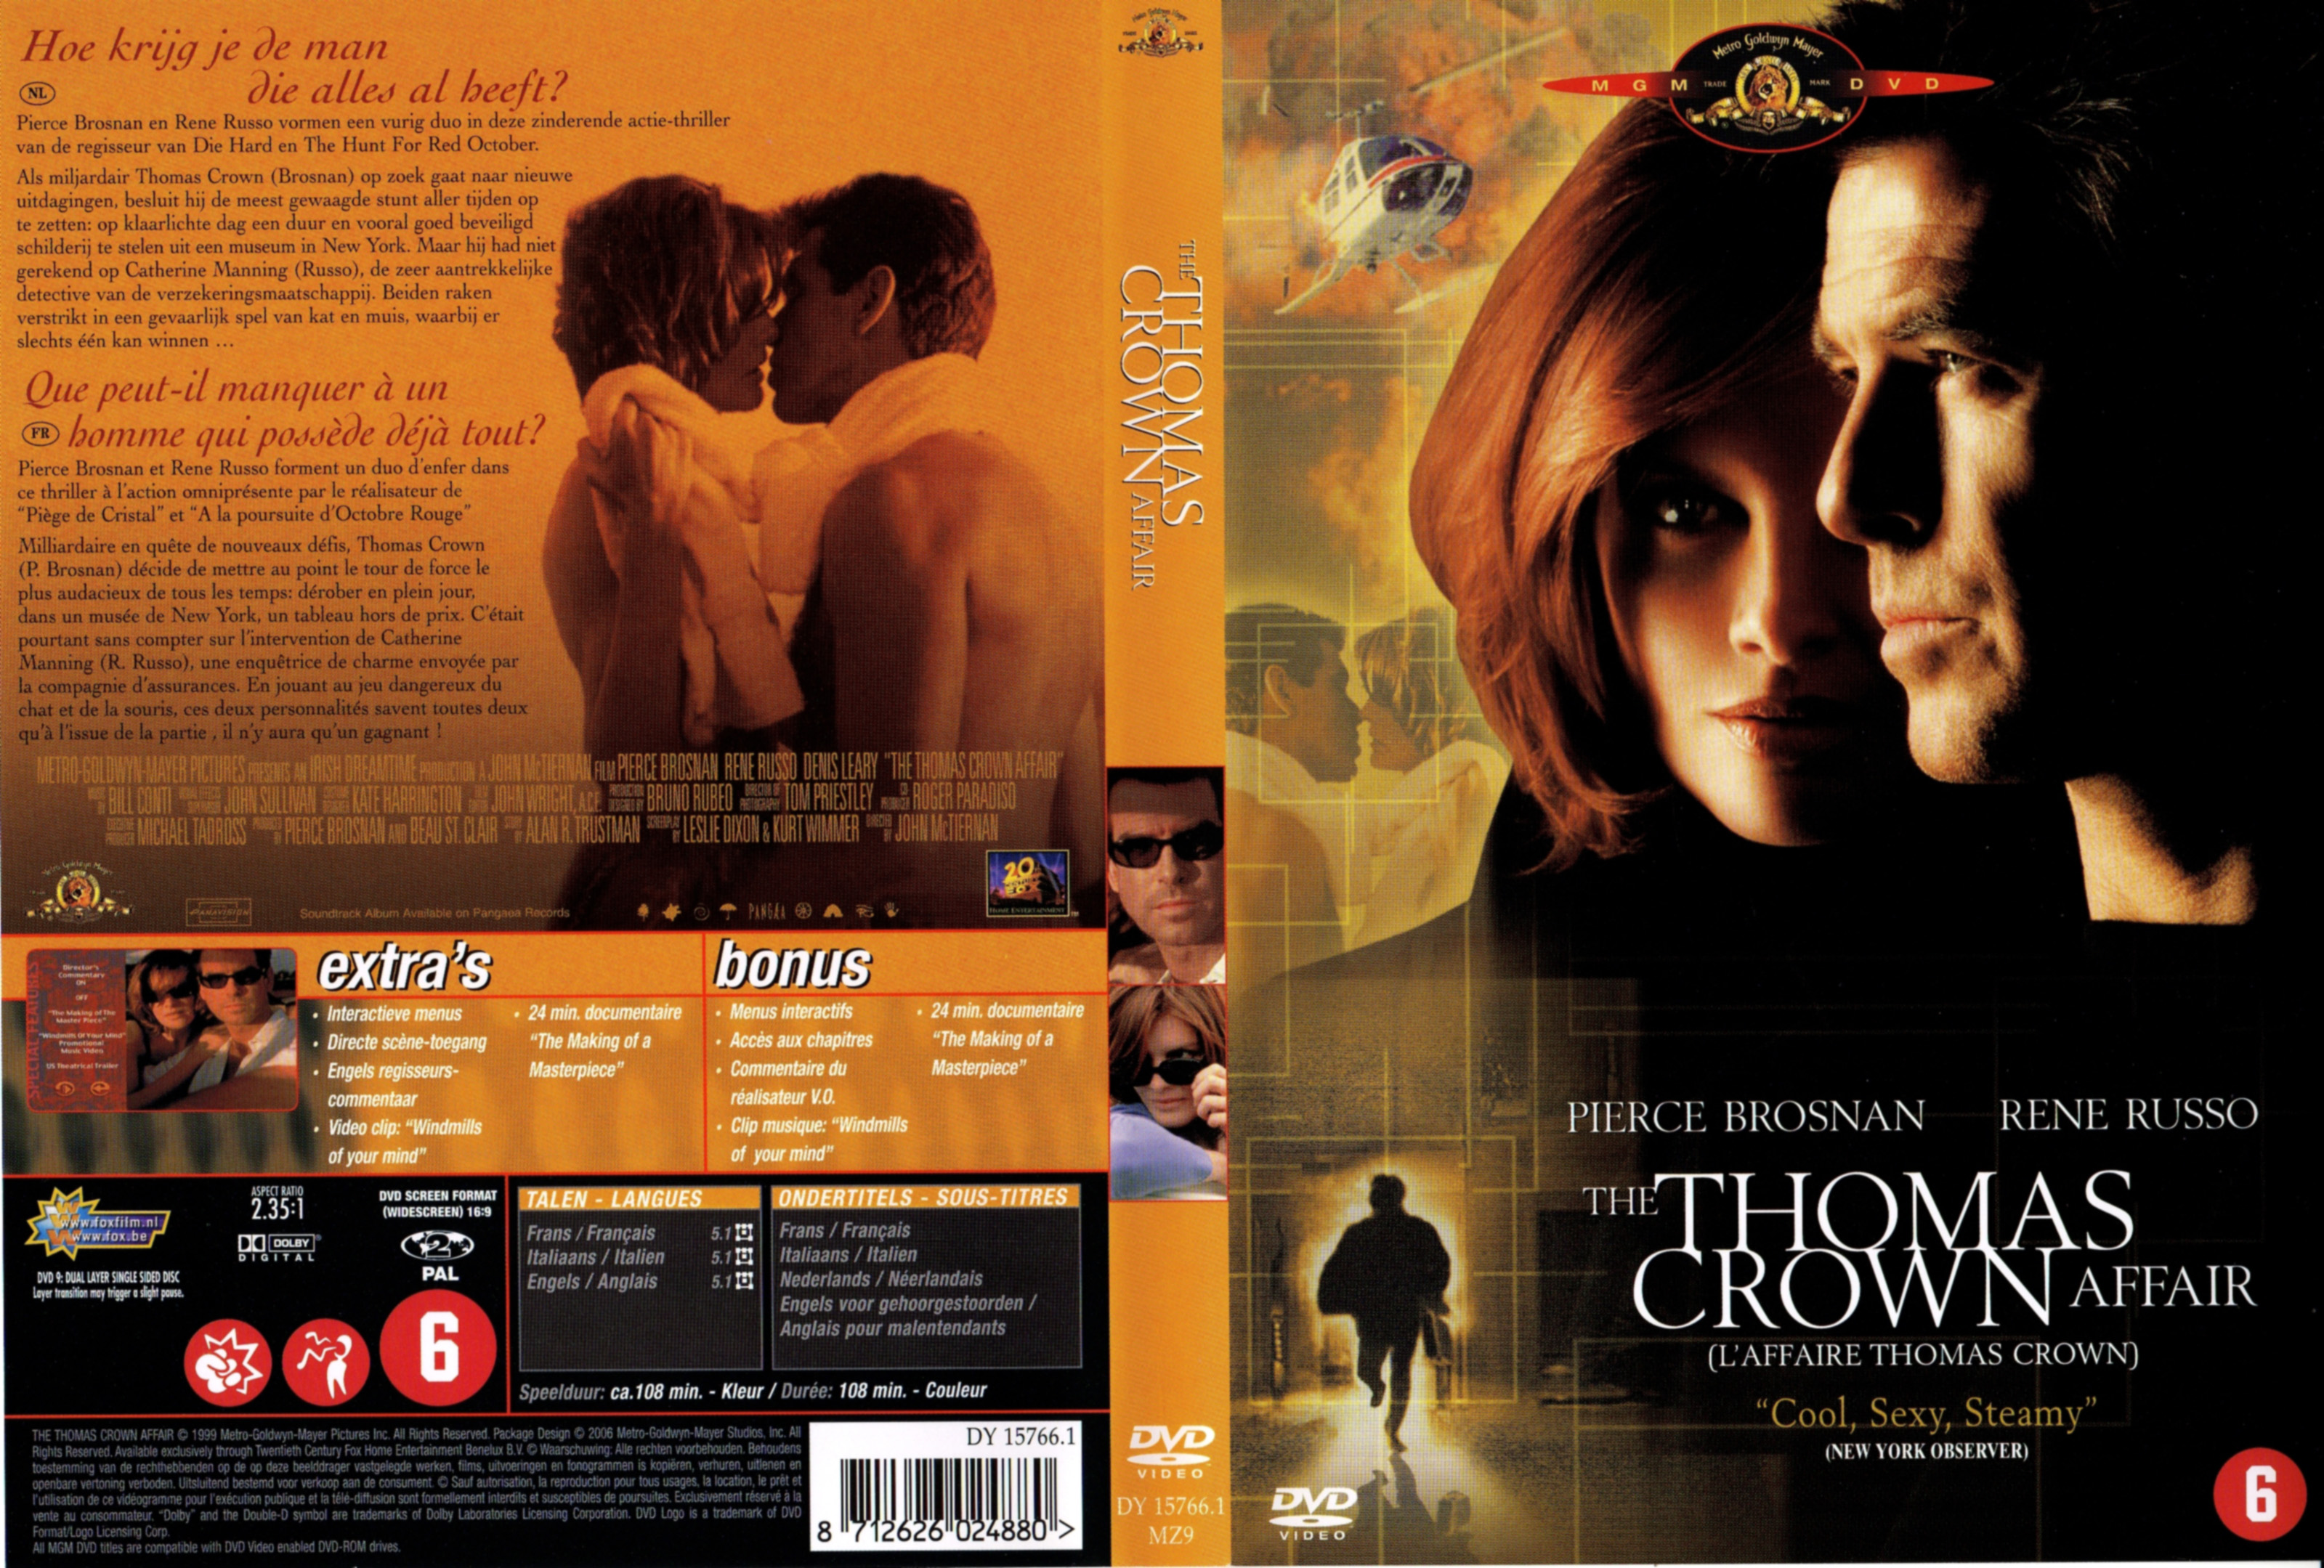 Jaquette DVD Thomas Crown v3